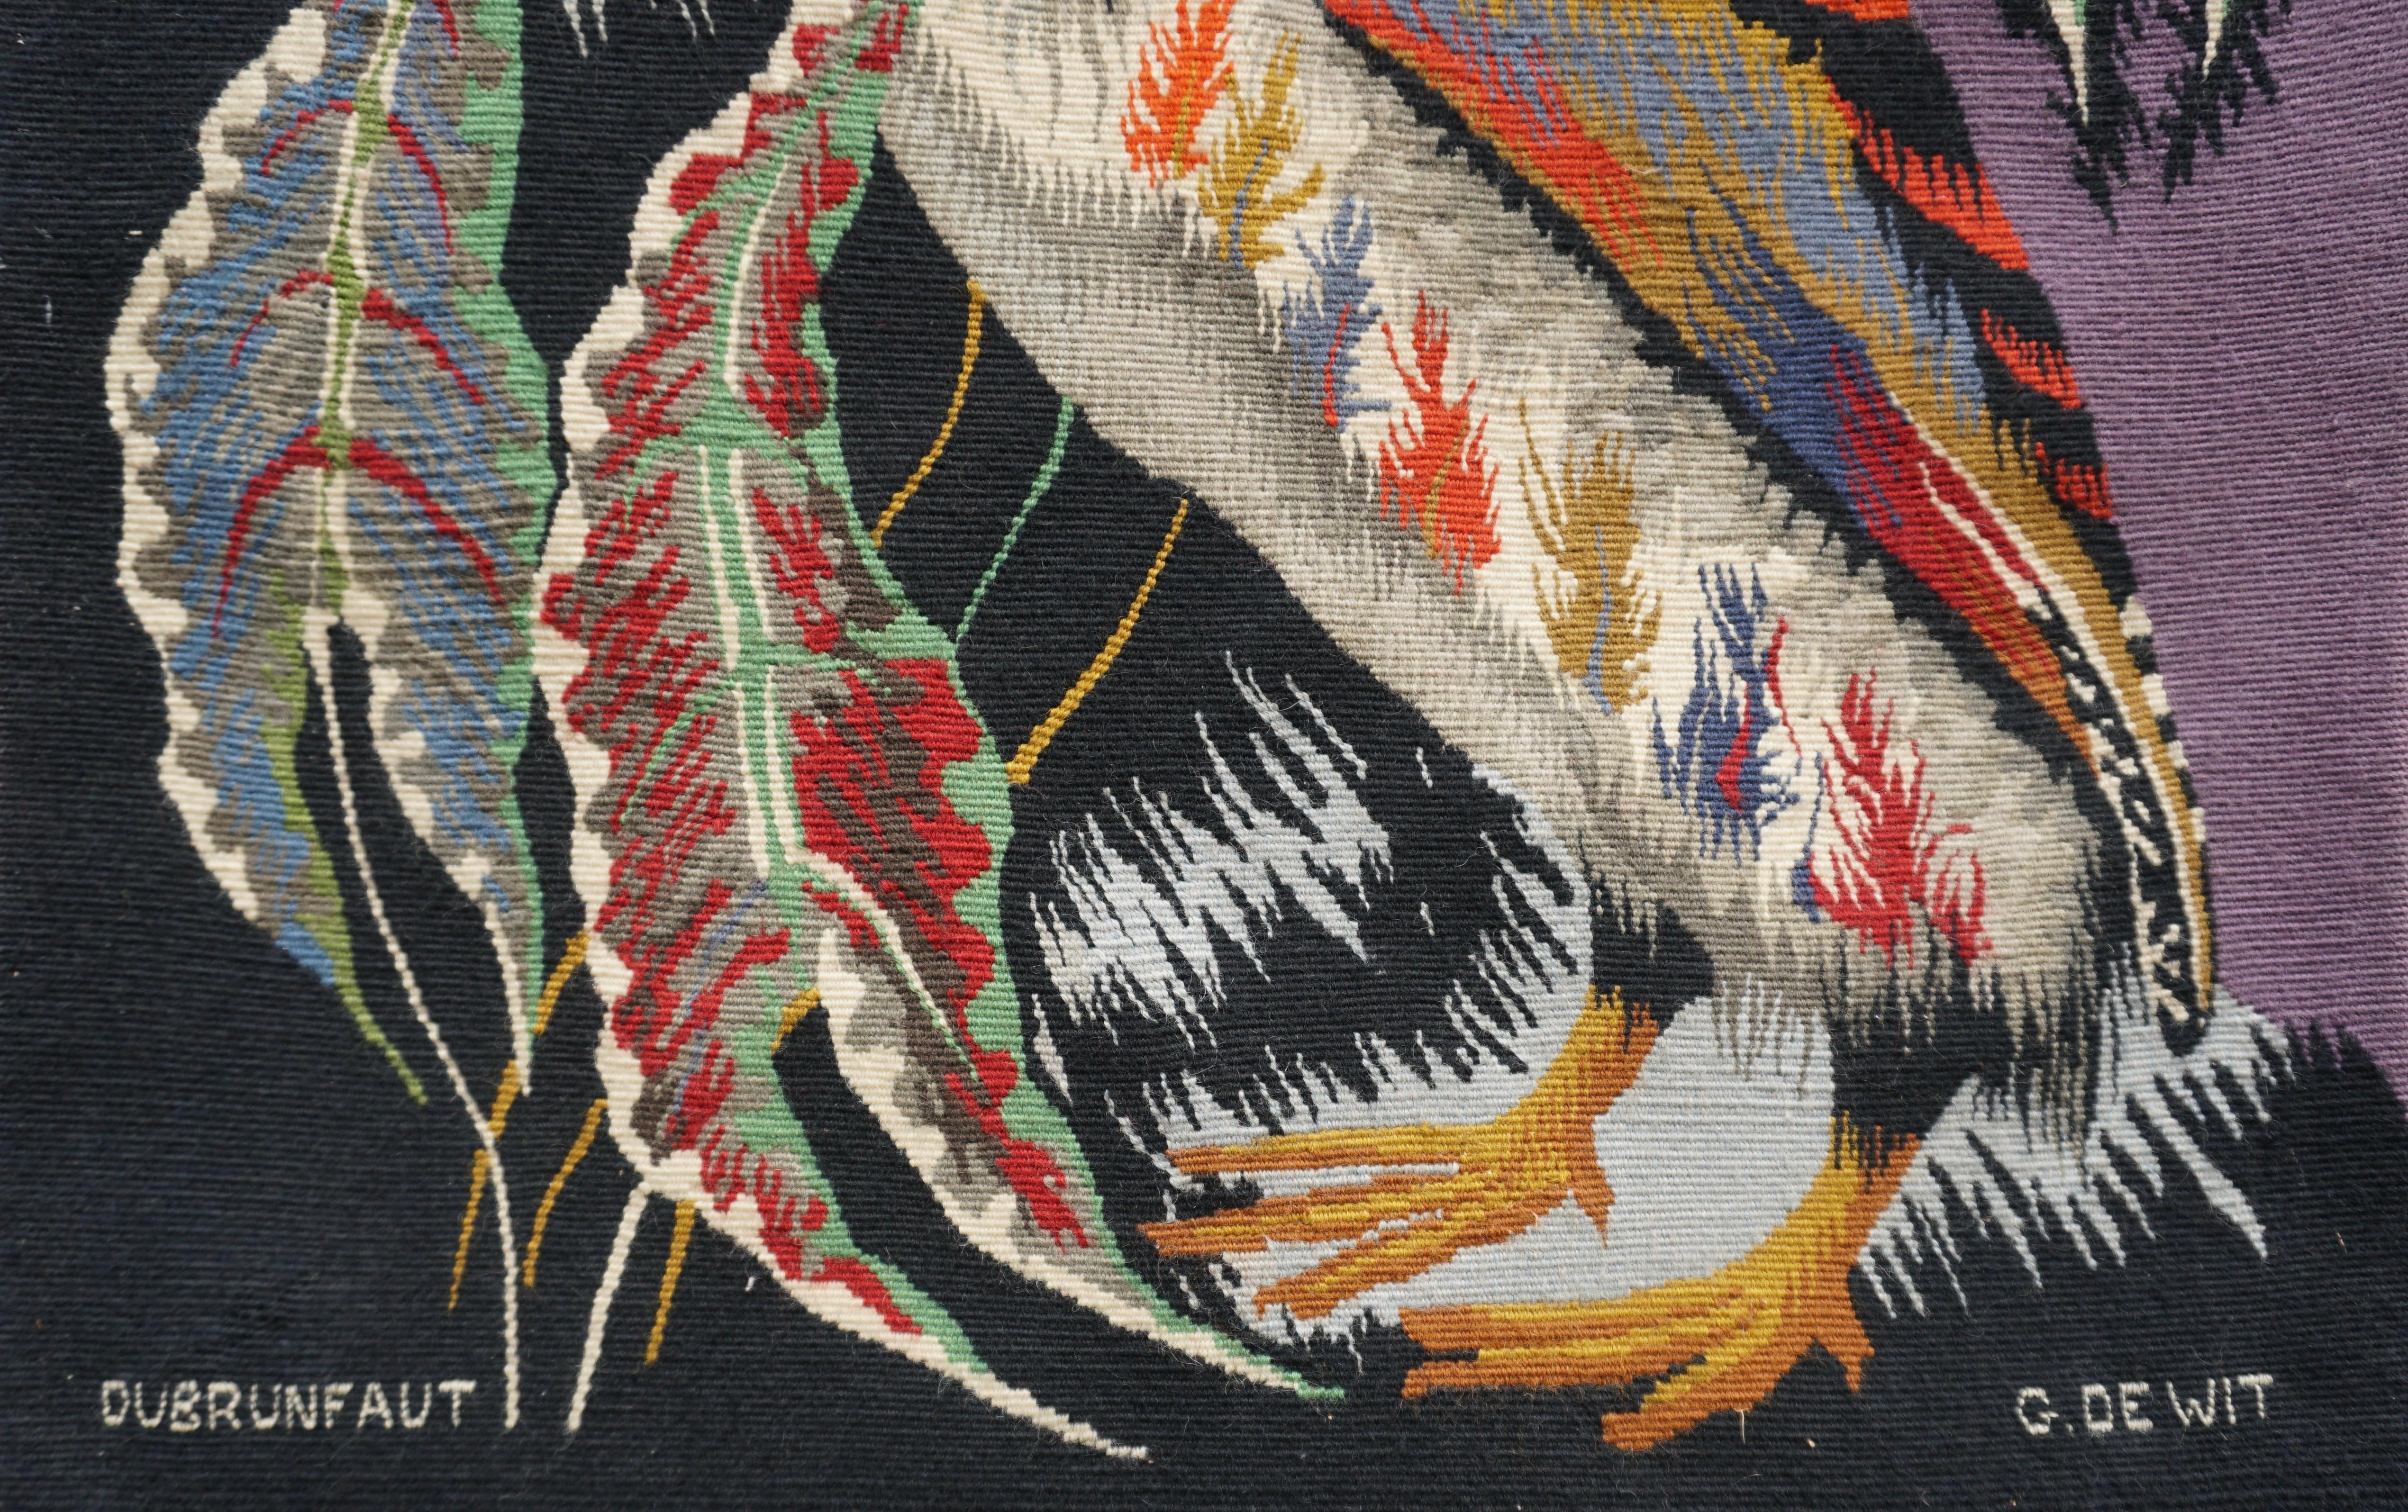 Hollywood Regency Spectacular Tapestry of a Crowned Bird Signed Edmond Dubrunfaut, Belgium, 1950